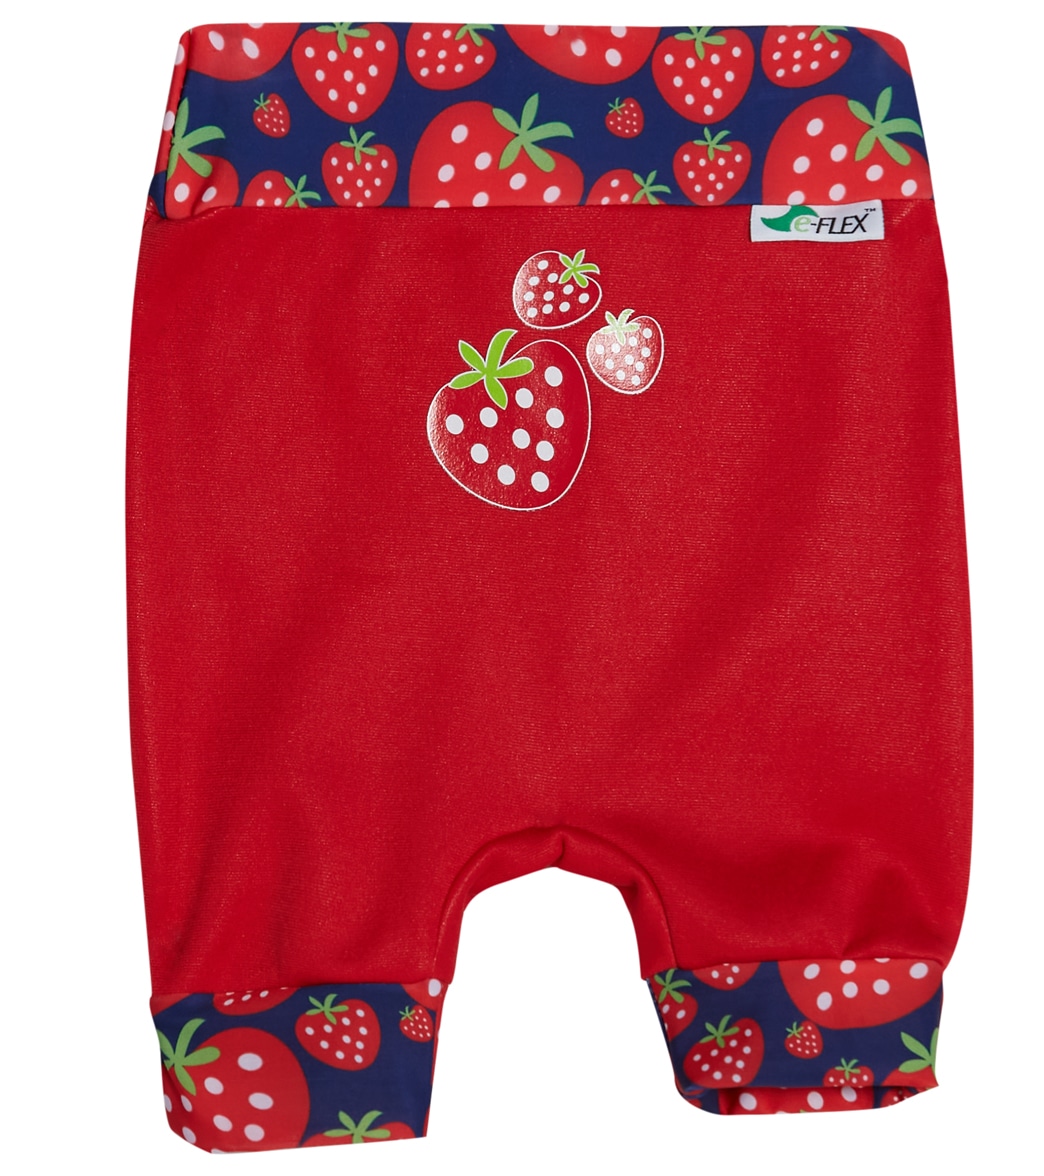 Konfidence Splashytm Nappy W E-Flex Baby - Red Strawberry 12-18 Months - Swimoutlet.com